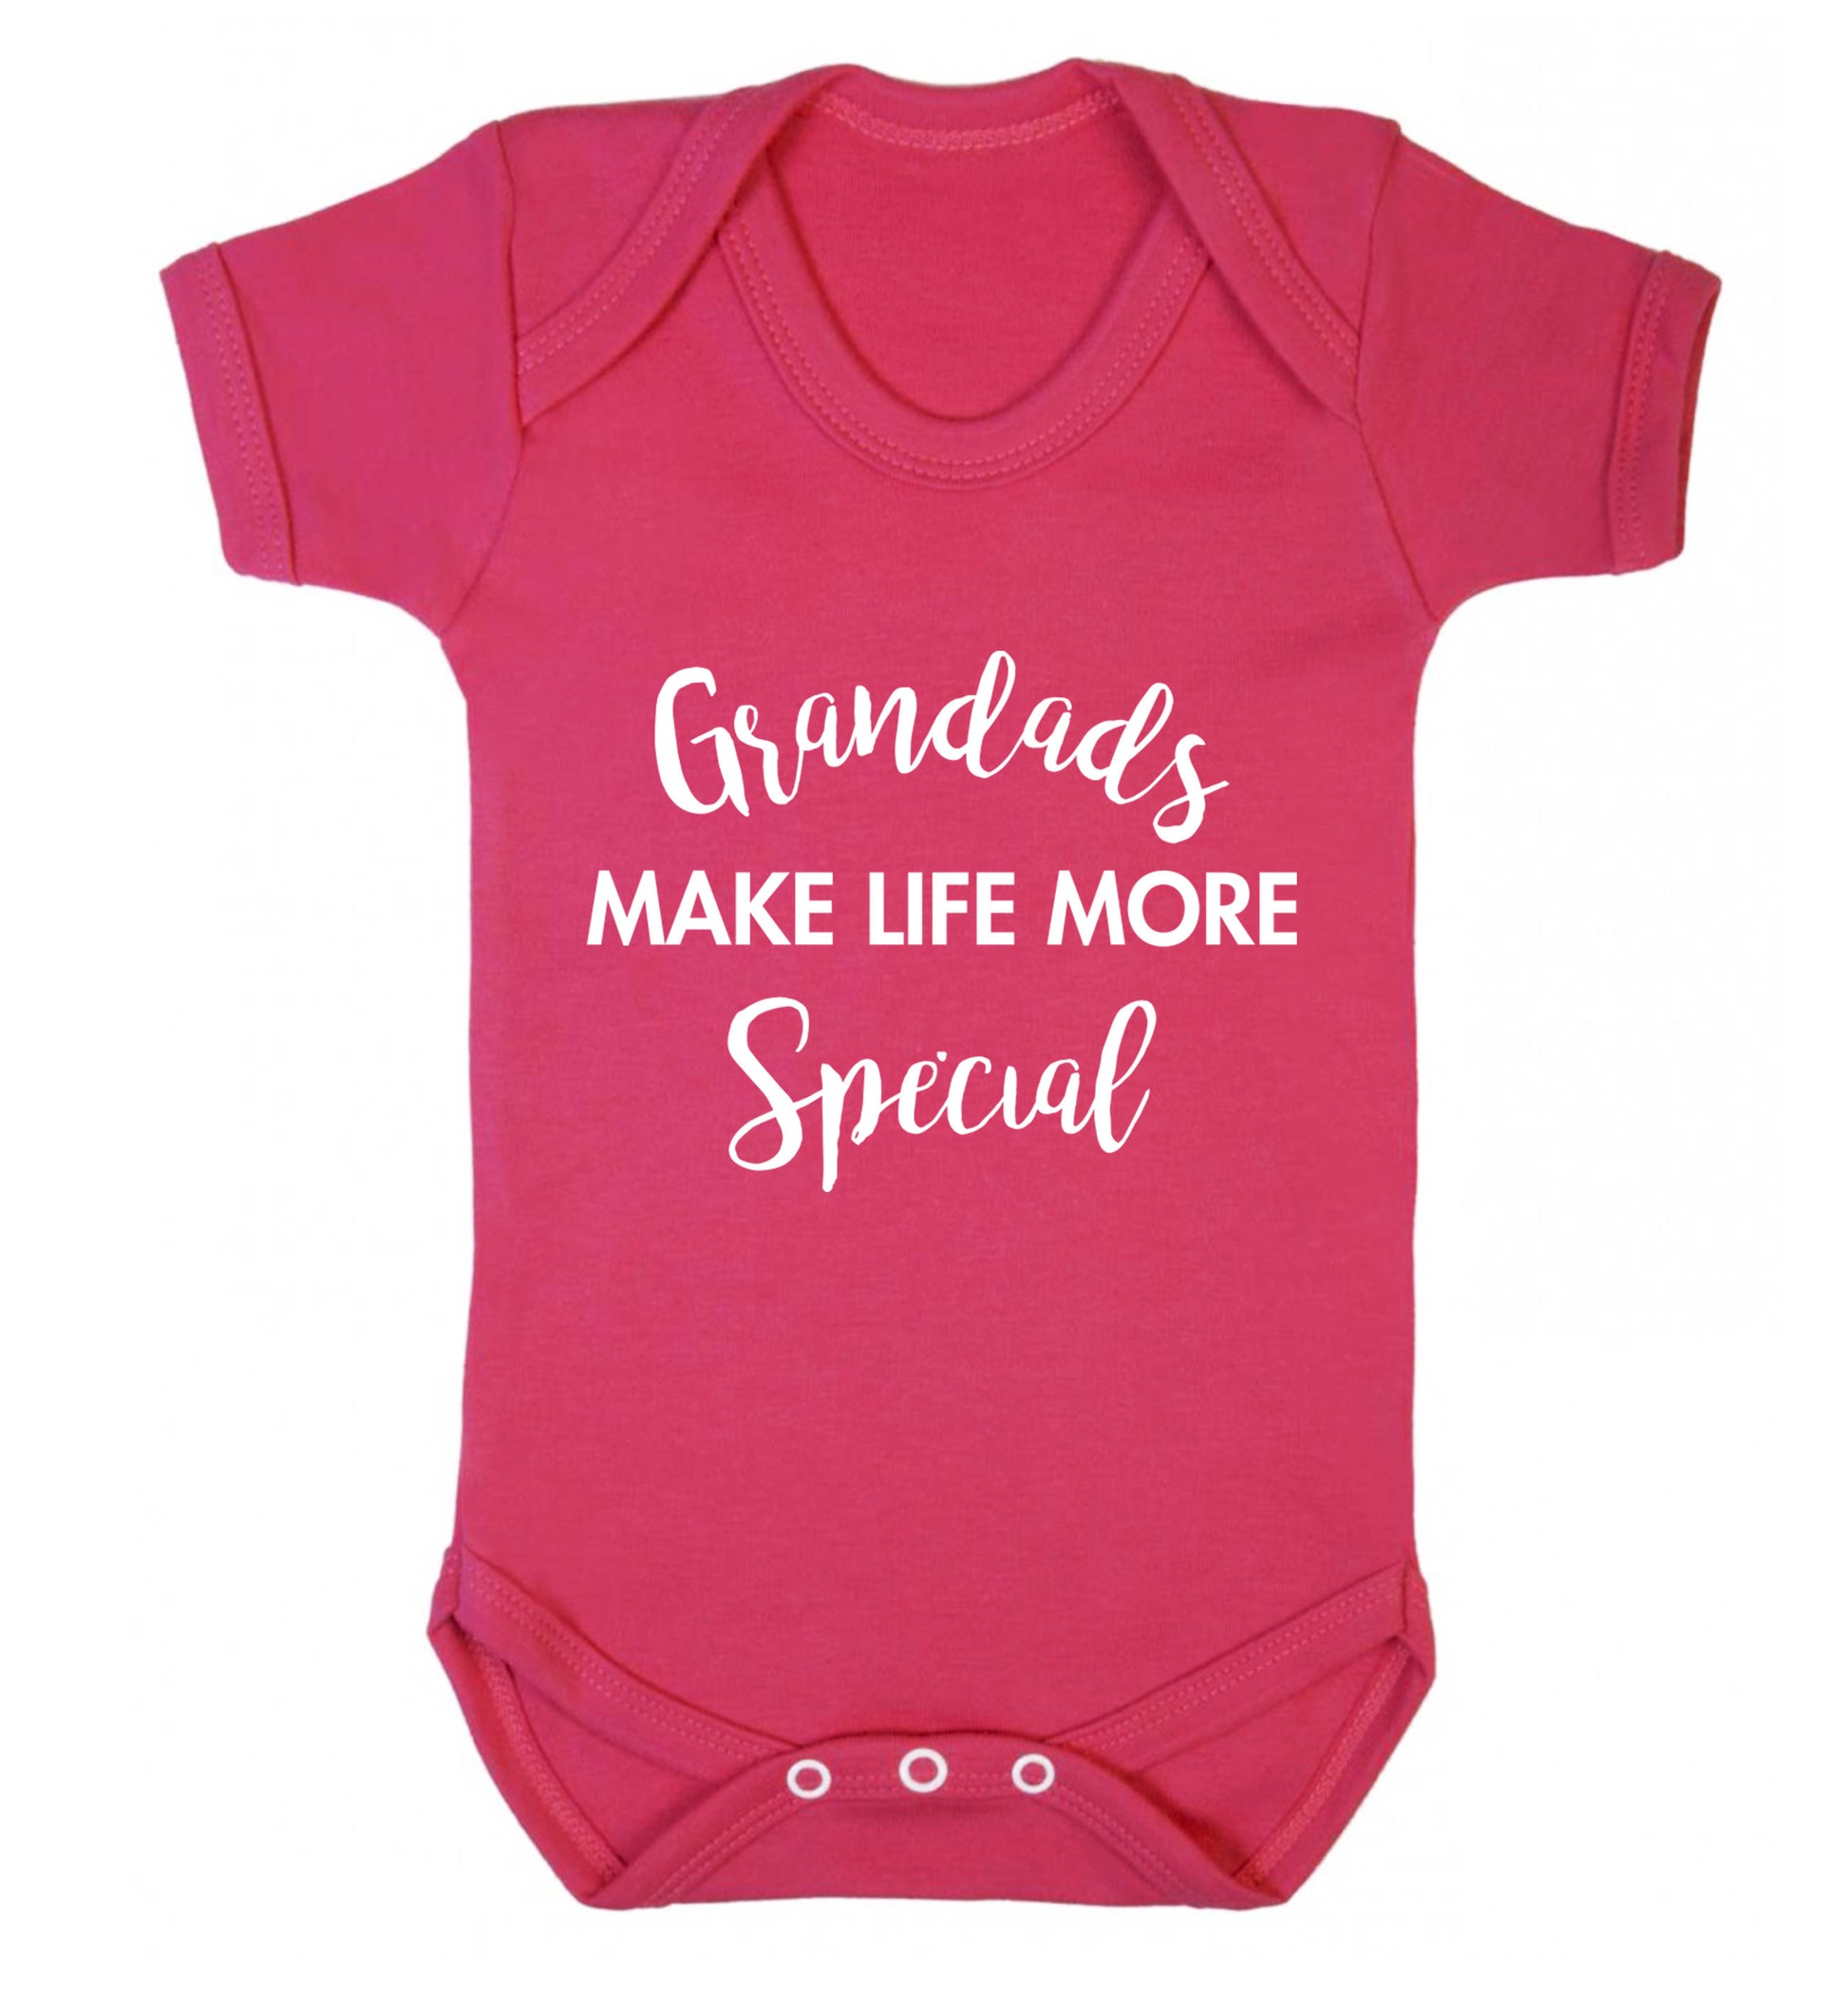 Grandads make life more special Baby Vest dark pink 18-24 months